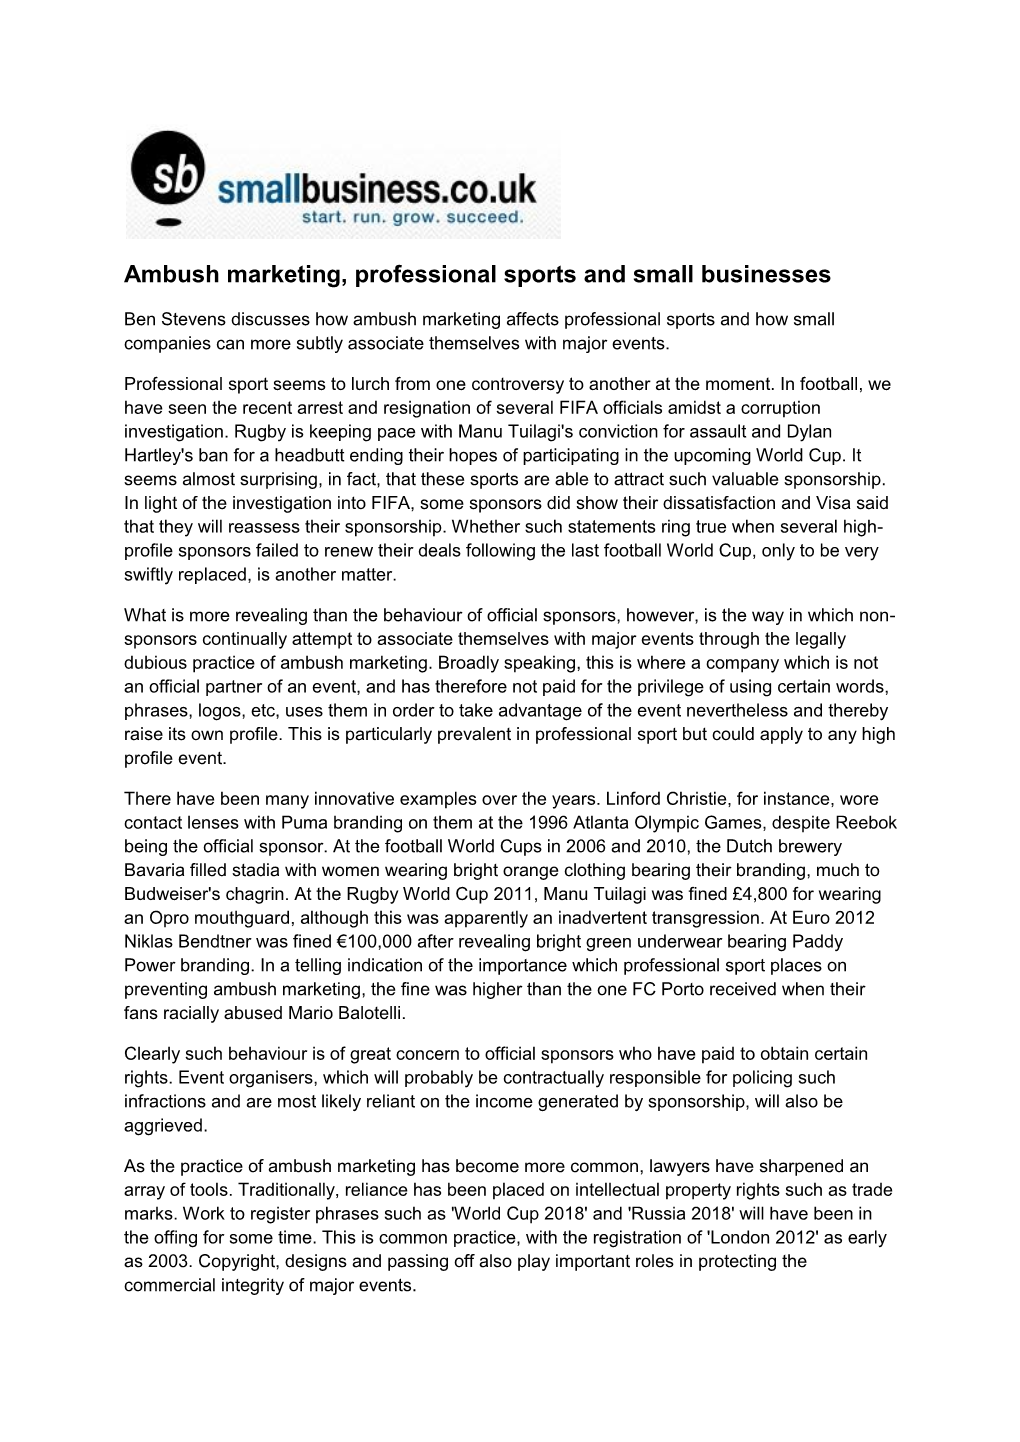 Ambush Marketing, Professional Sports and Small Businesses